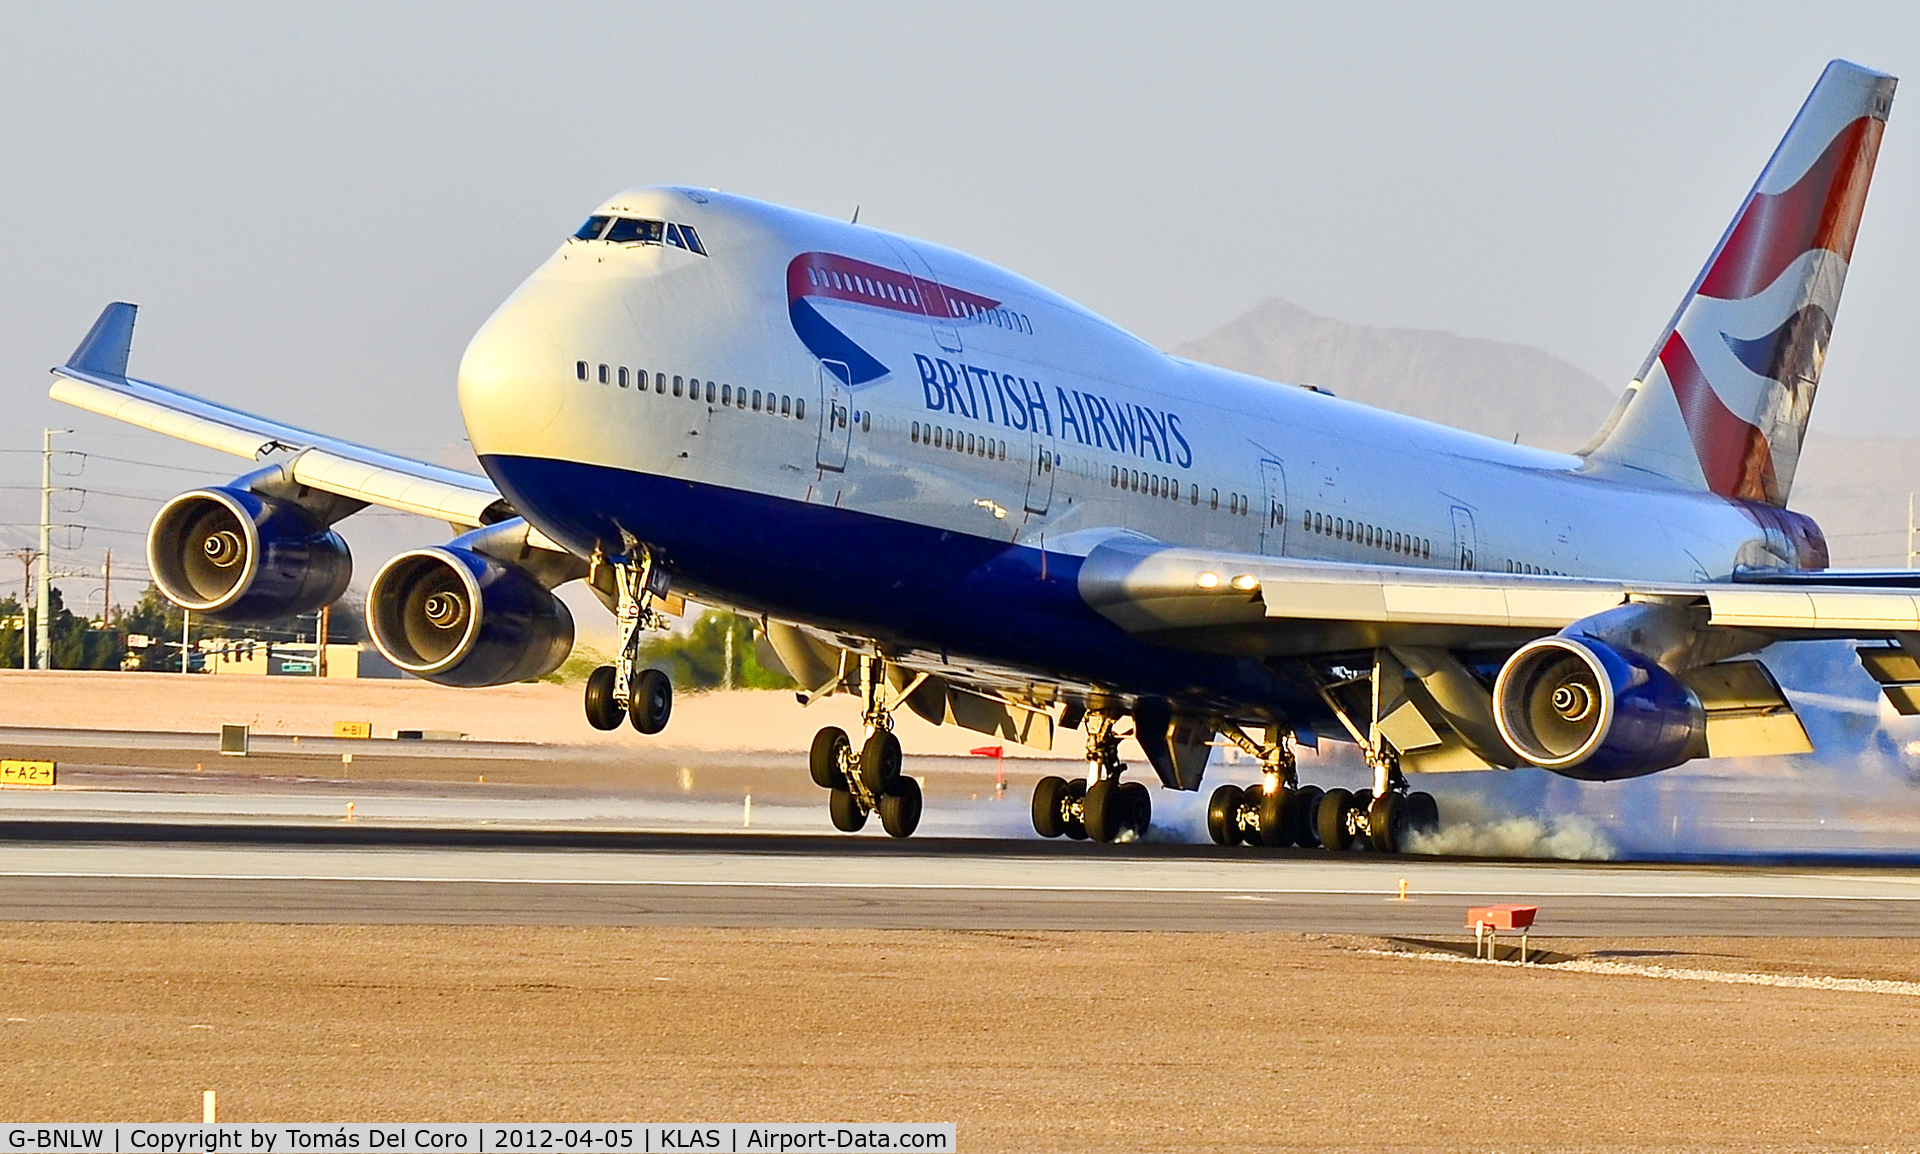 G-BNLW, 1992 Boeing 747-436 C/N 25432, G-BNLW British Airways 1992 Boeing 747-436 C/N 25432

- Las Vegas - McCarran International (LAS / KLAS)
USA - Nevada, April 5, 2012
Photo: Tomás Del Coro